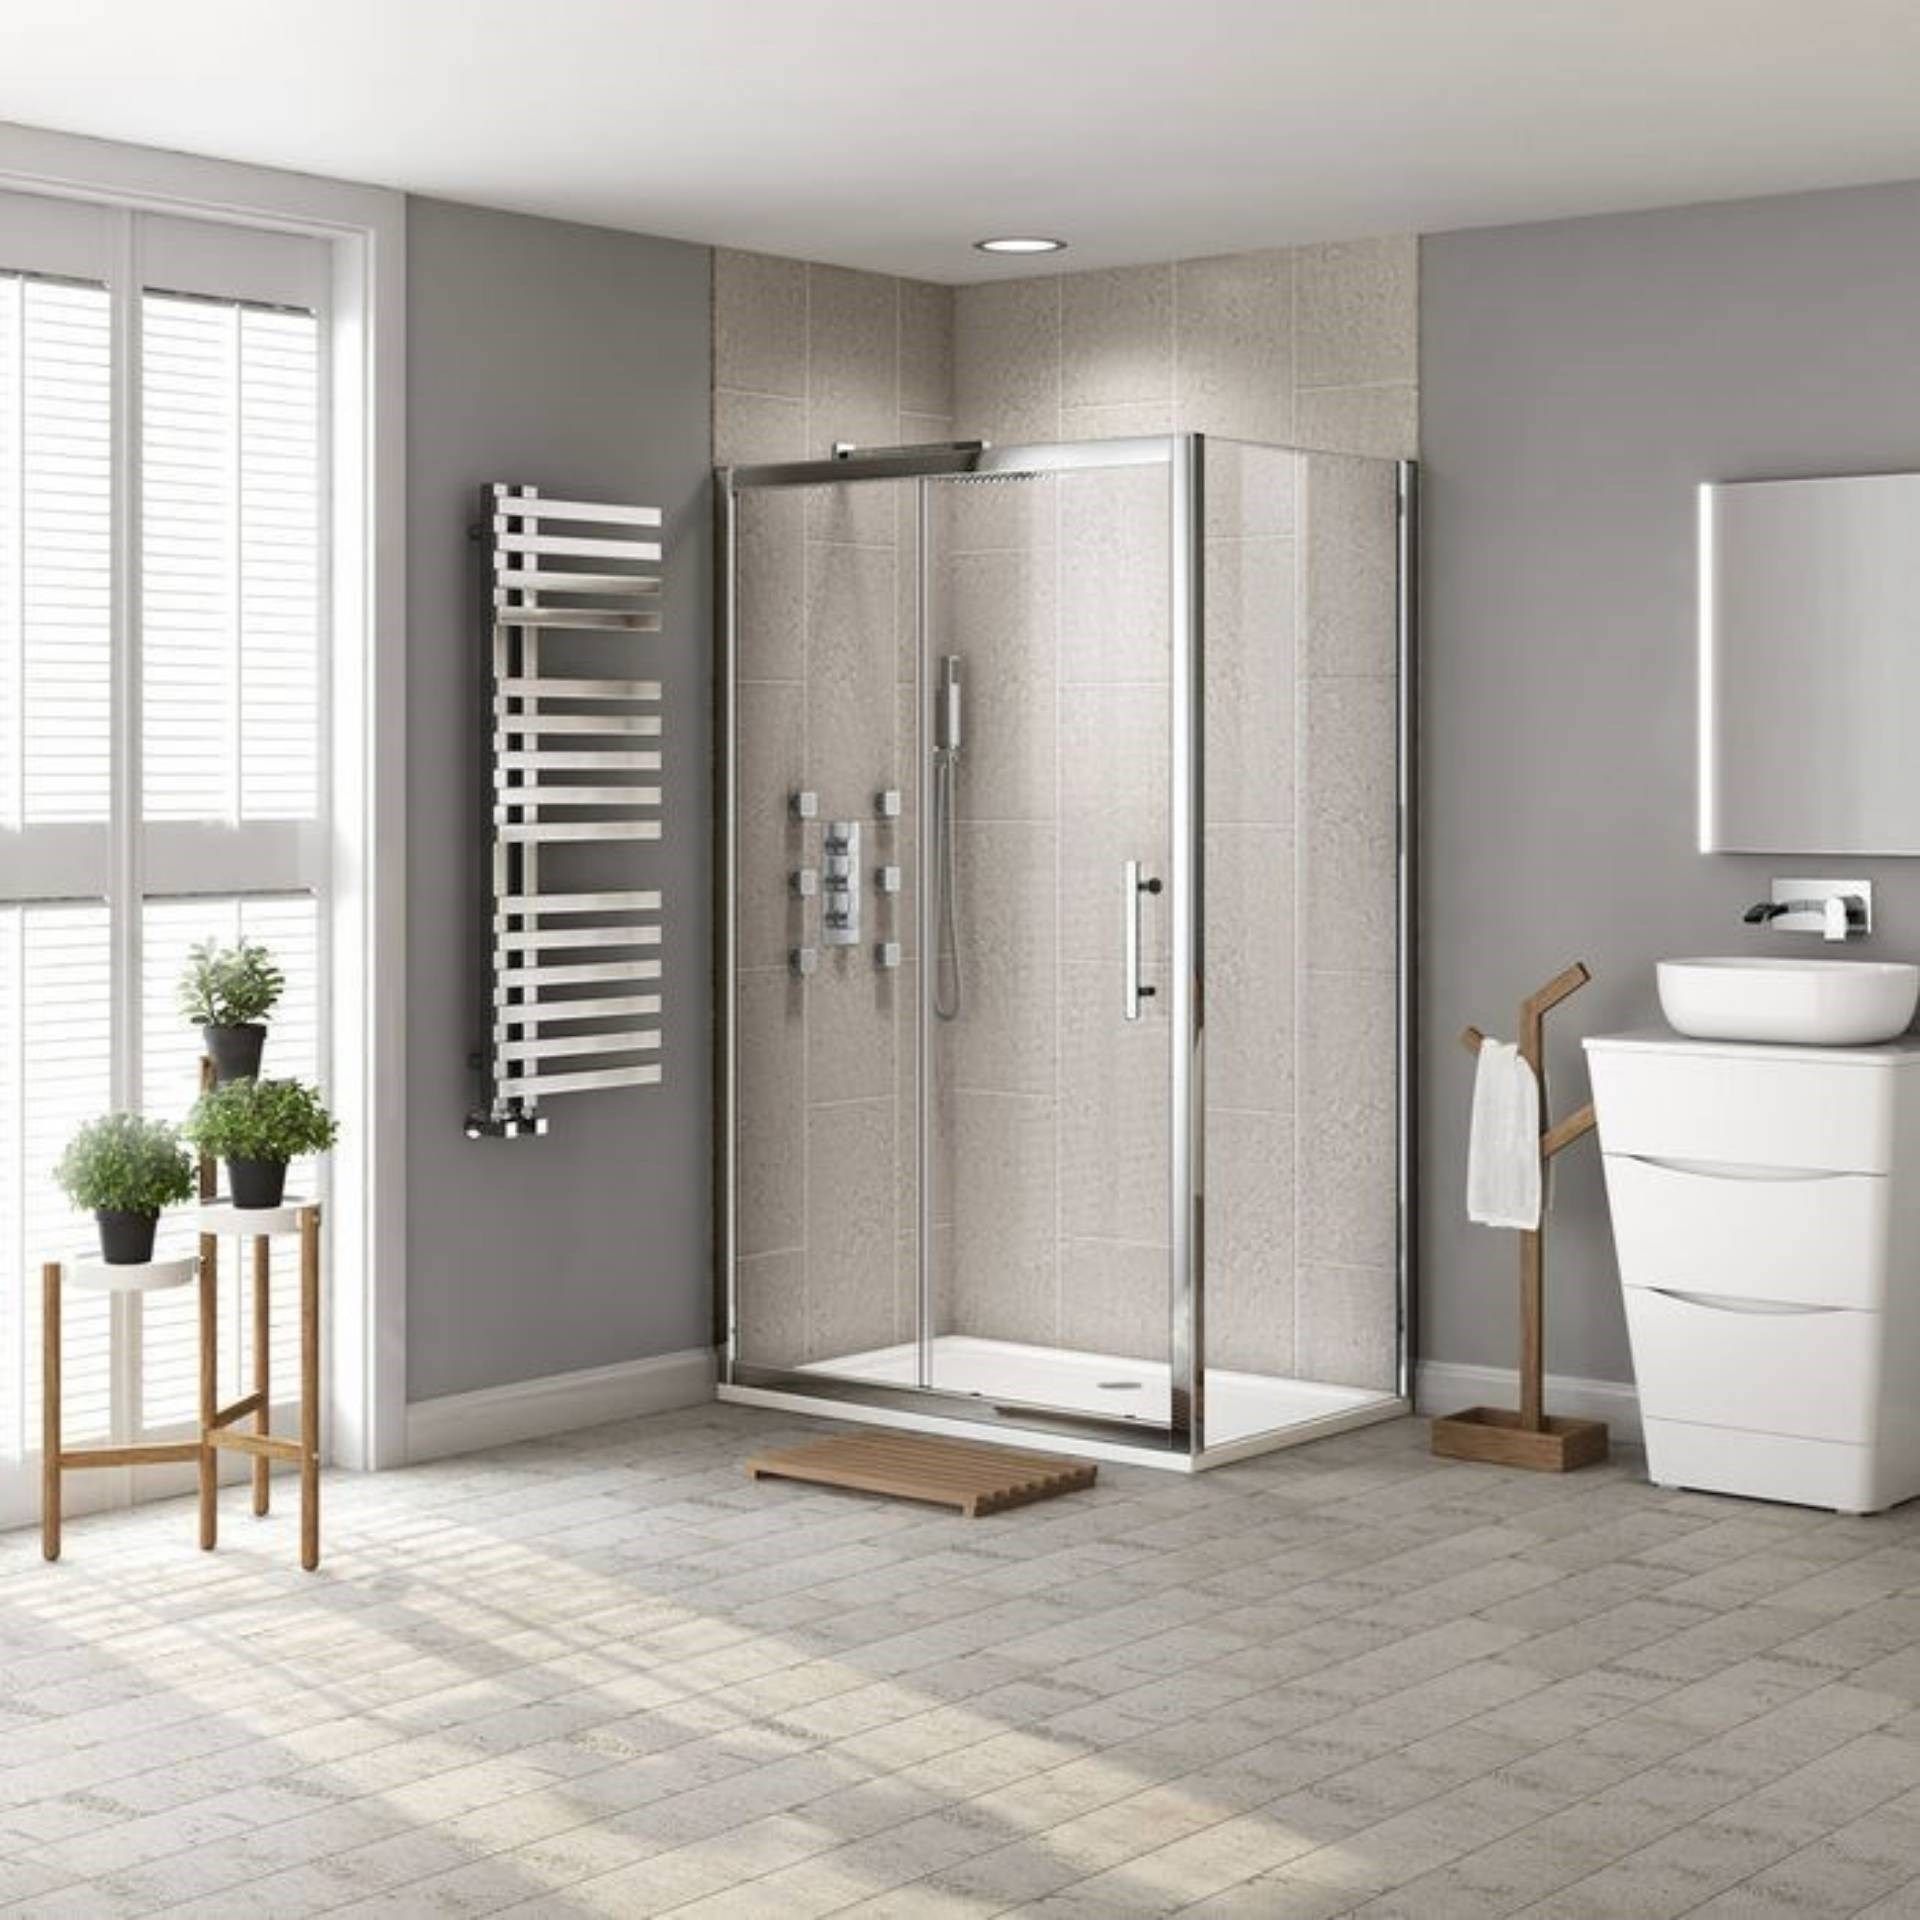 NEW & BOXED Twyfords 1100x900mm - Premium EasyClean Sliding Door Shower Enclosure.RRP £549.99.... - Image 2 of 3